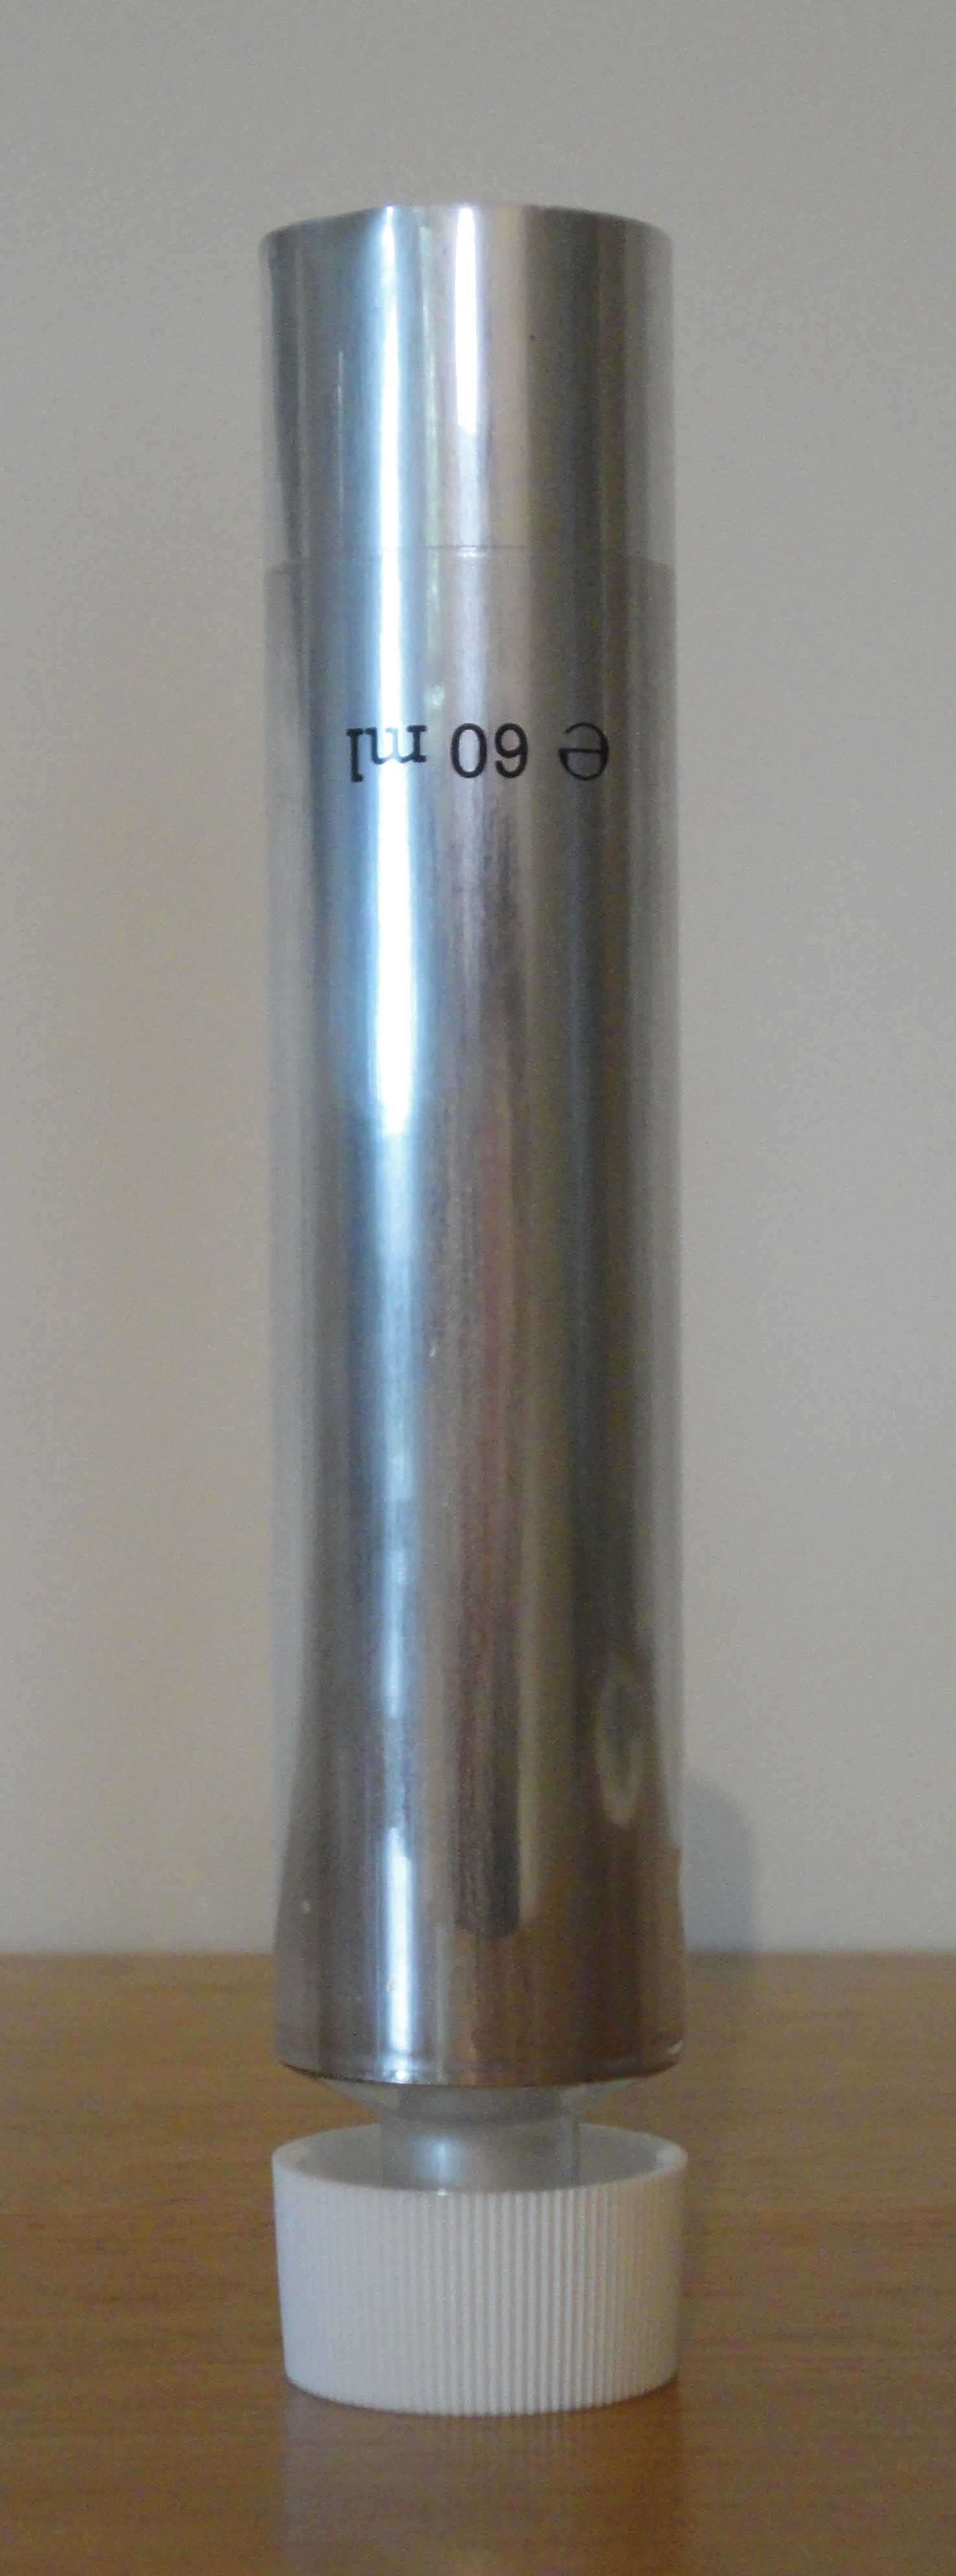 tubes-aluminium-vides-huile-art-techniques-peinture-6.jpg